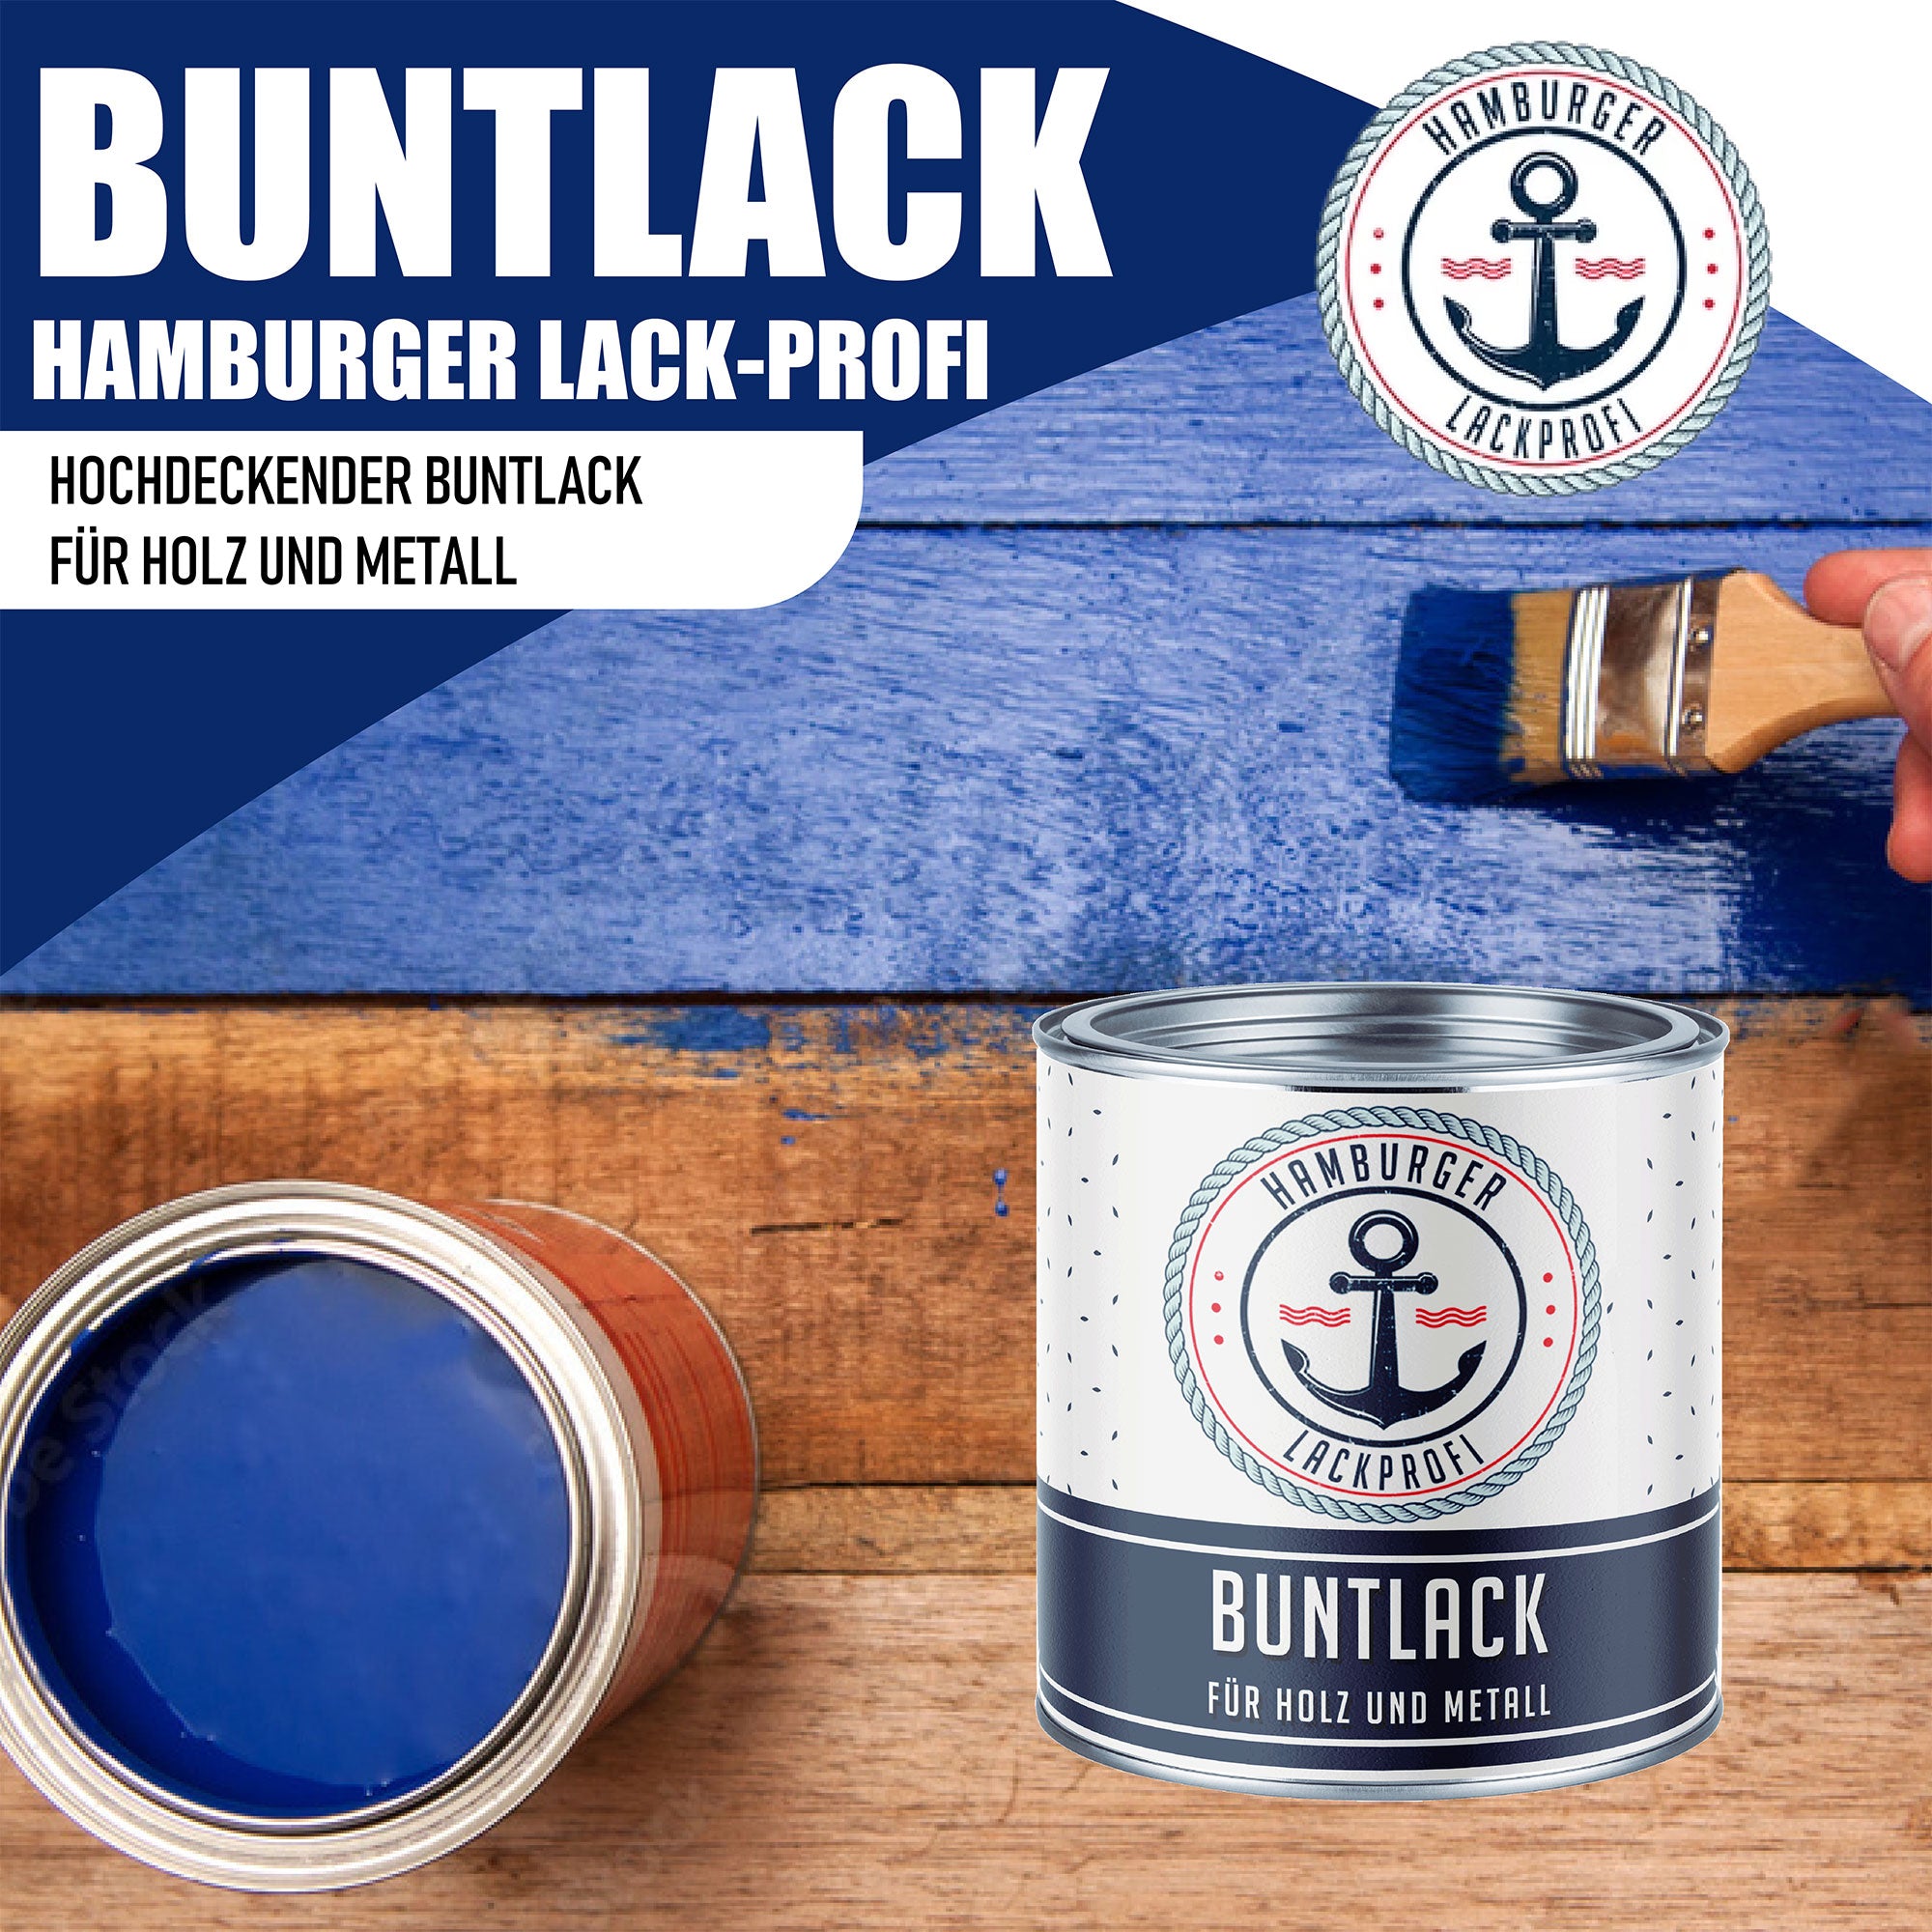 Hamburger Lack-Profi Buntlack in Rotviolett RAL 4002 mit Lackierset (X300) & Verdünnung (1 L) - 30% Sparangebot